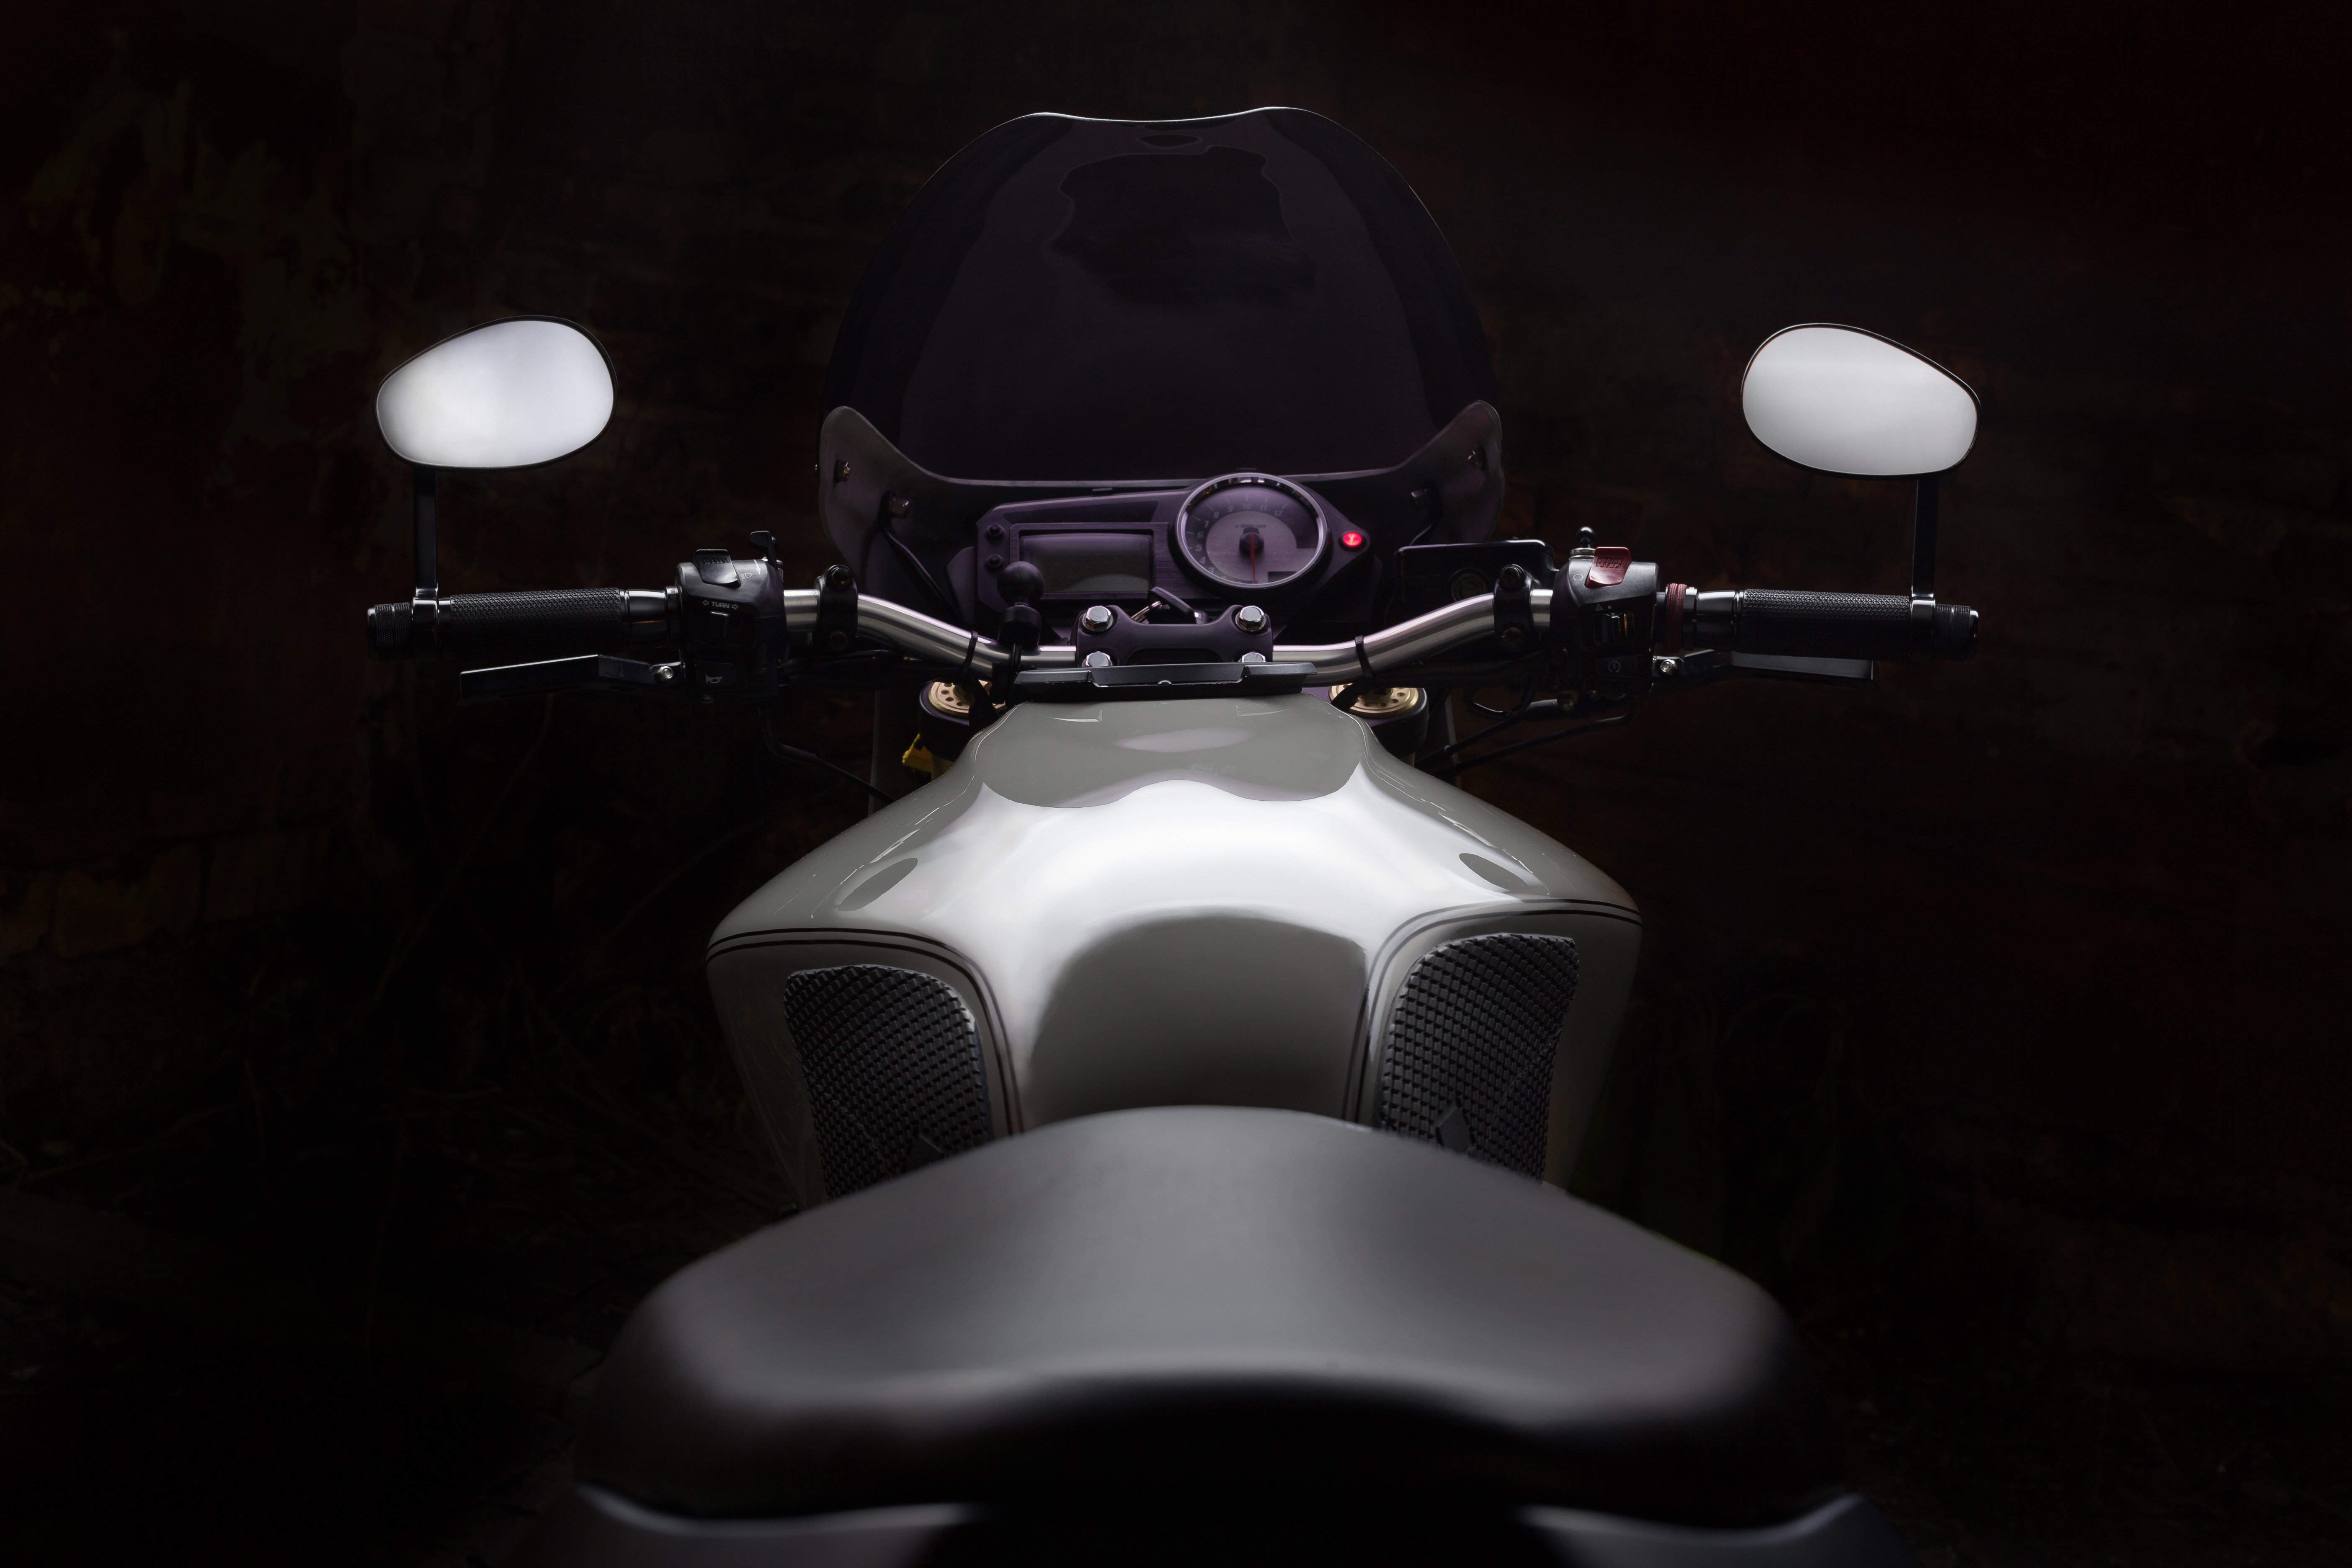 Custom caferacer motorbike on dark background with its headlight on